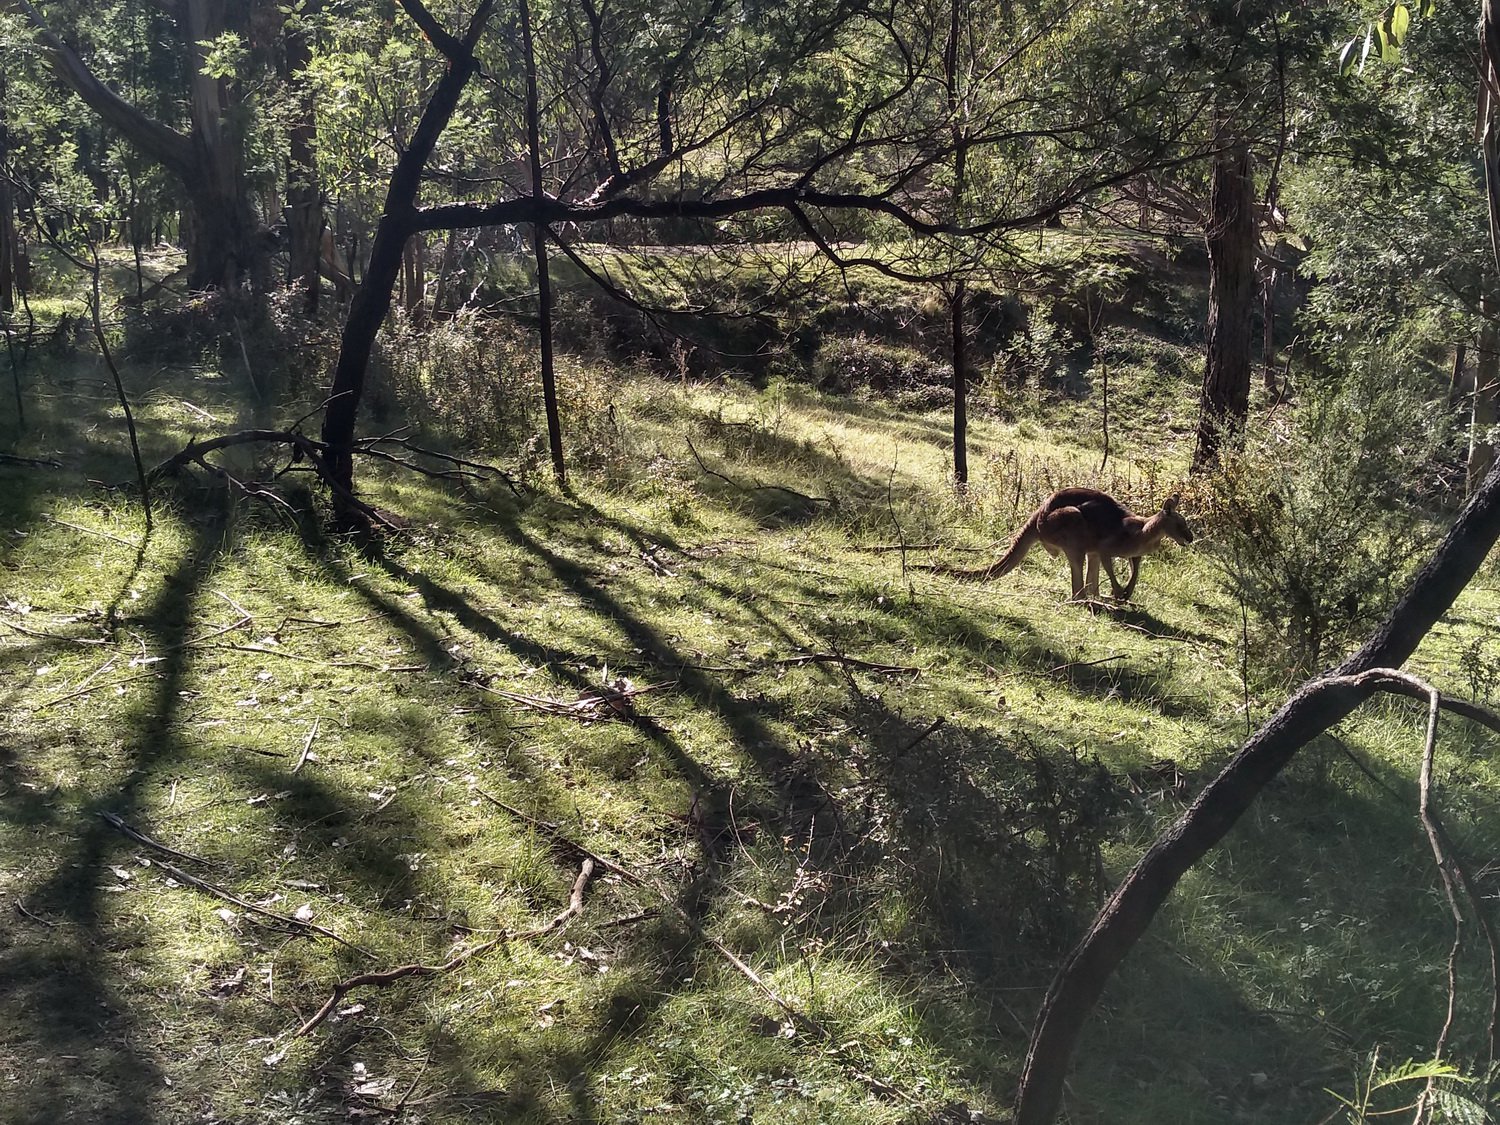 A close encounter of a kangaroo feeding under the trees. Sugarloaf Reservoir walk, May 2020.